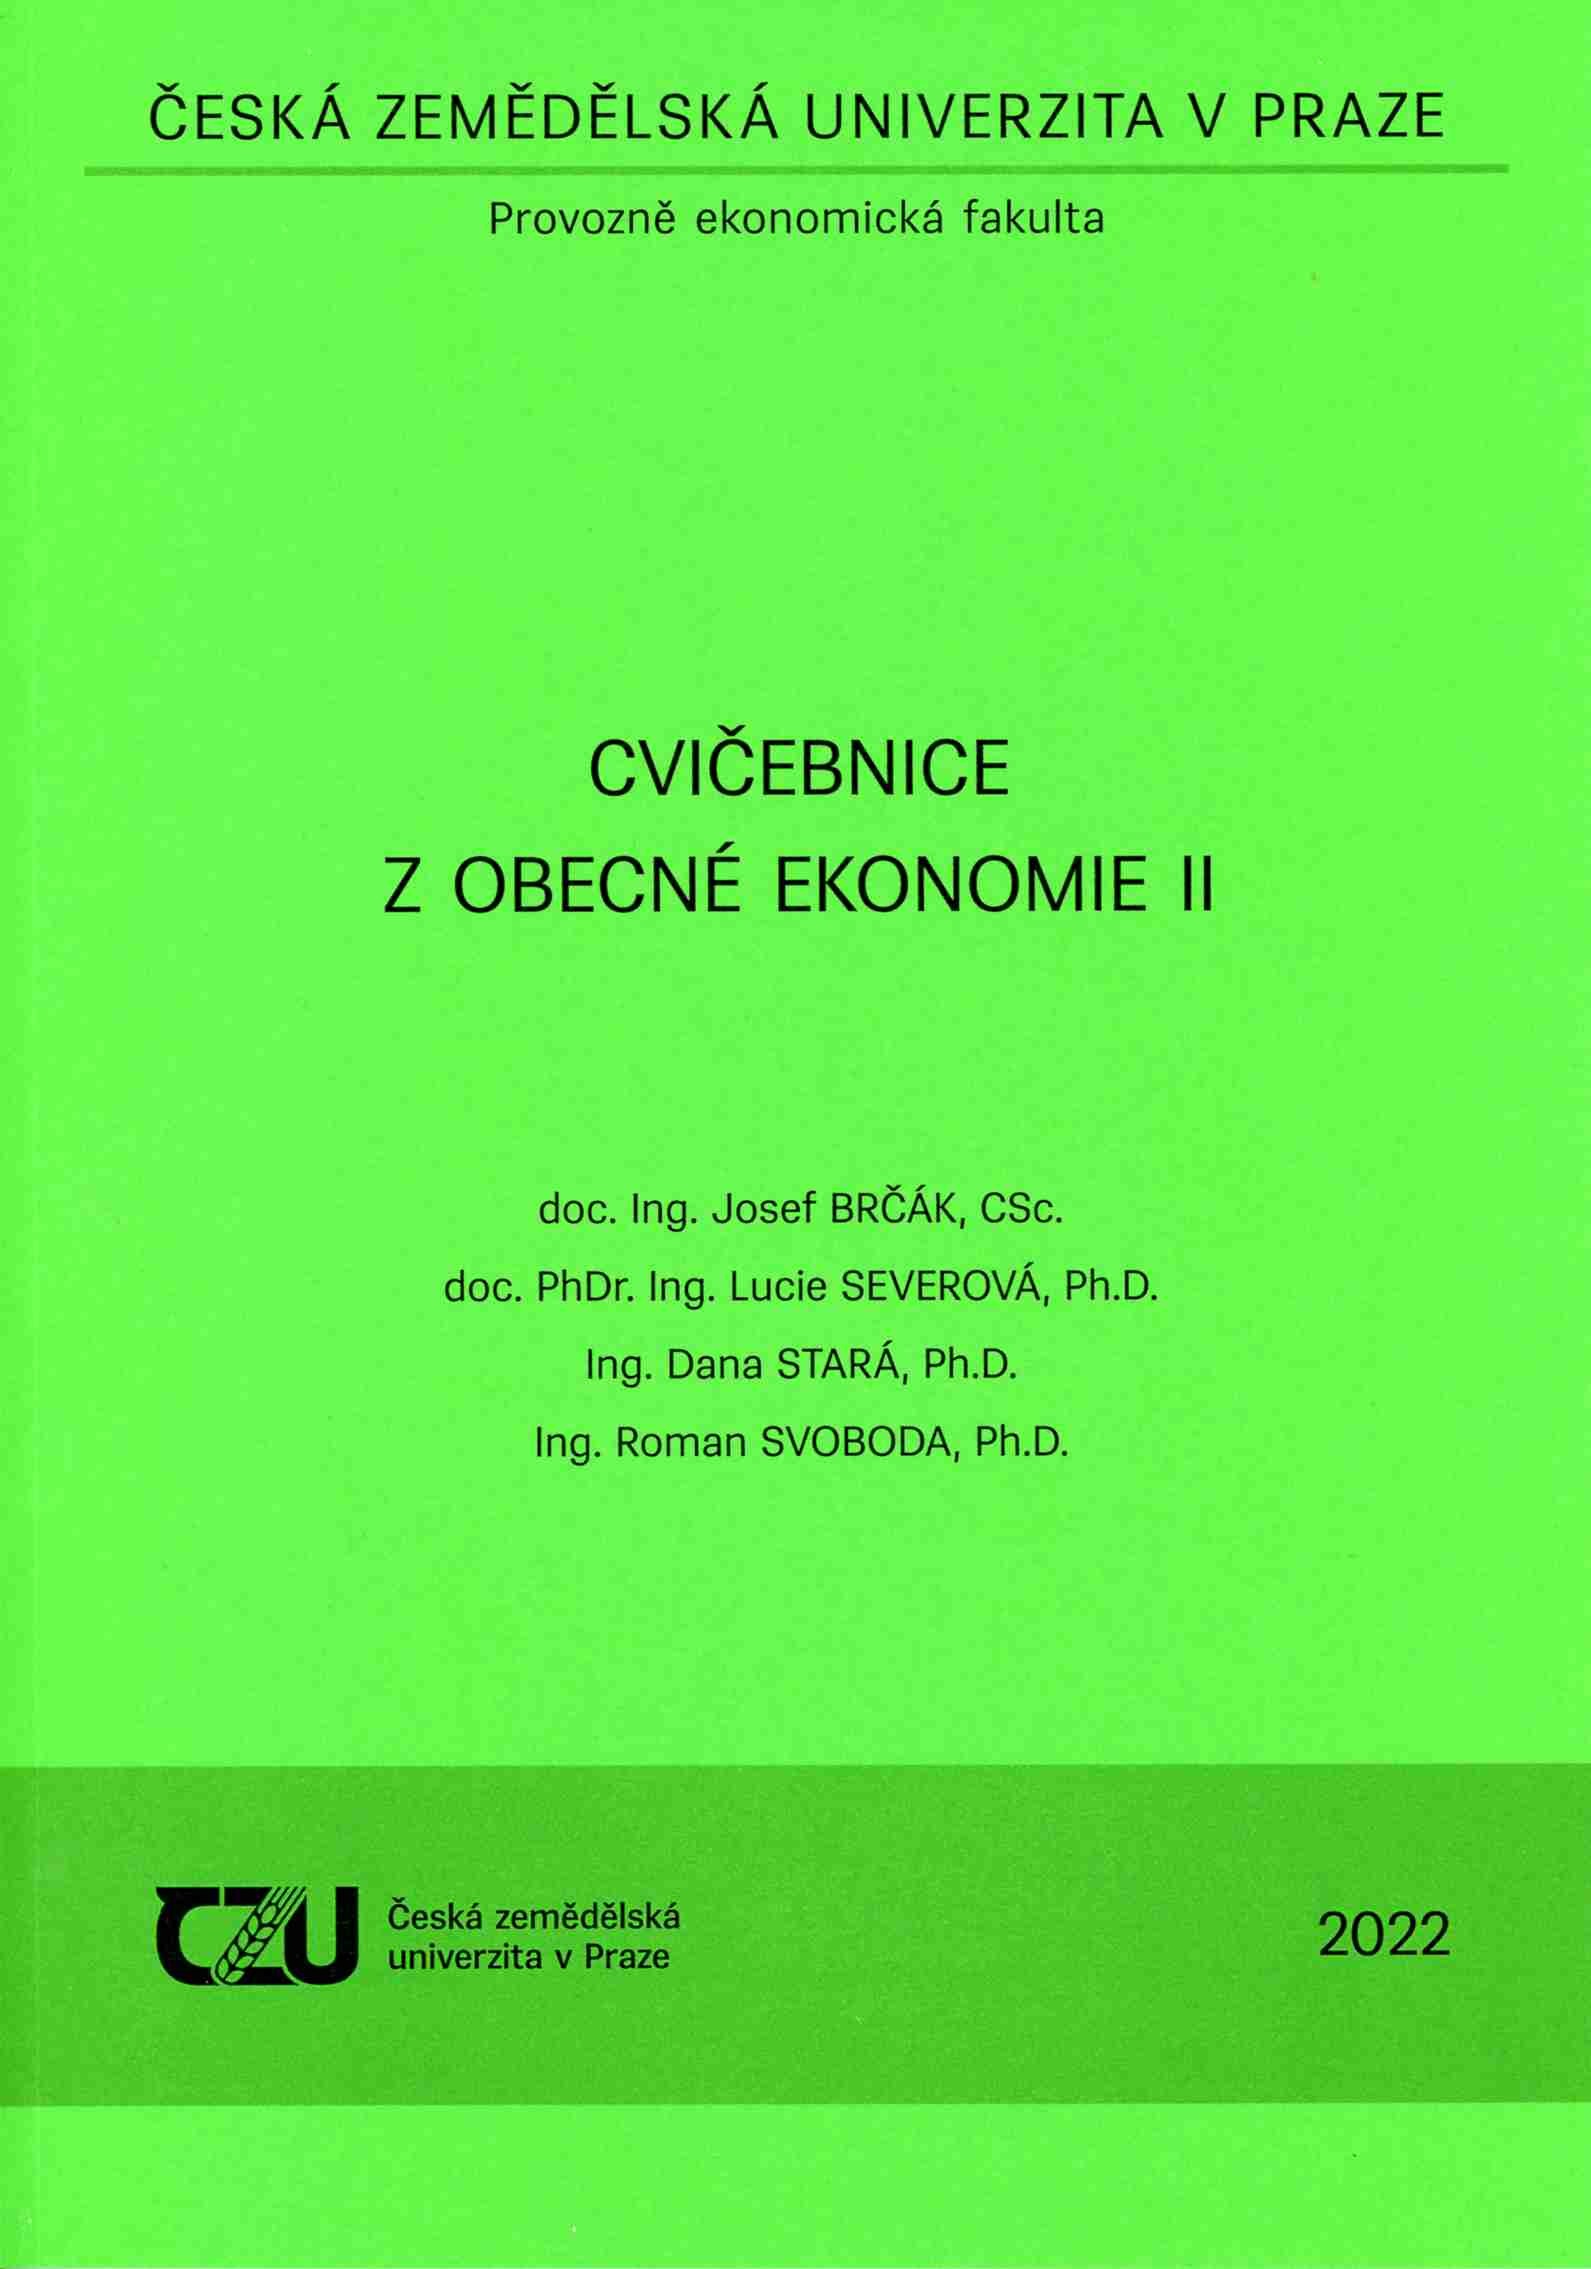 Cvičebnice z obecné ekonomie II (VSRR, HKS, SYI)